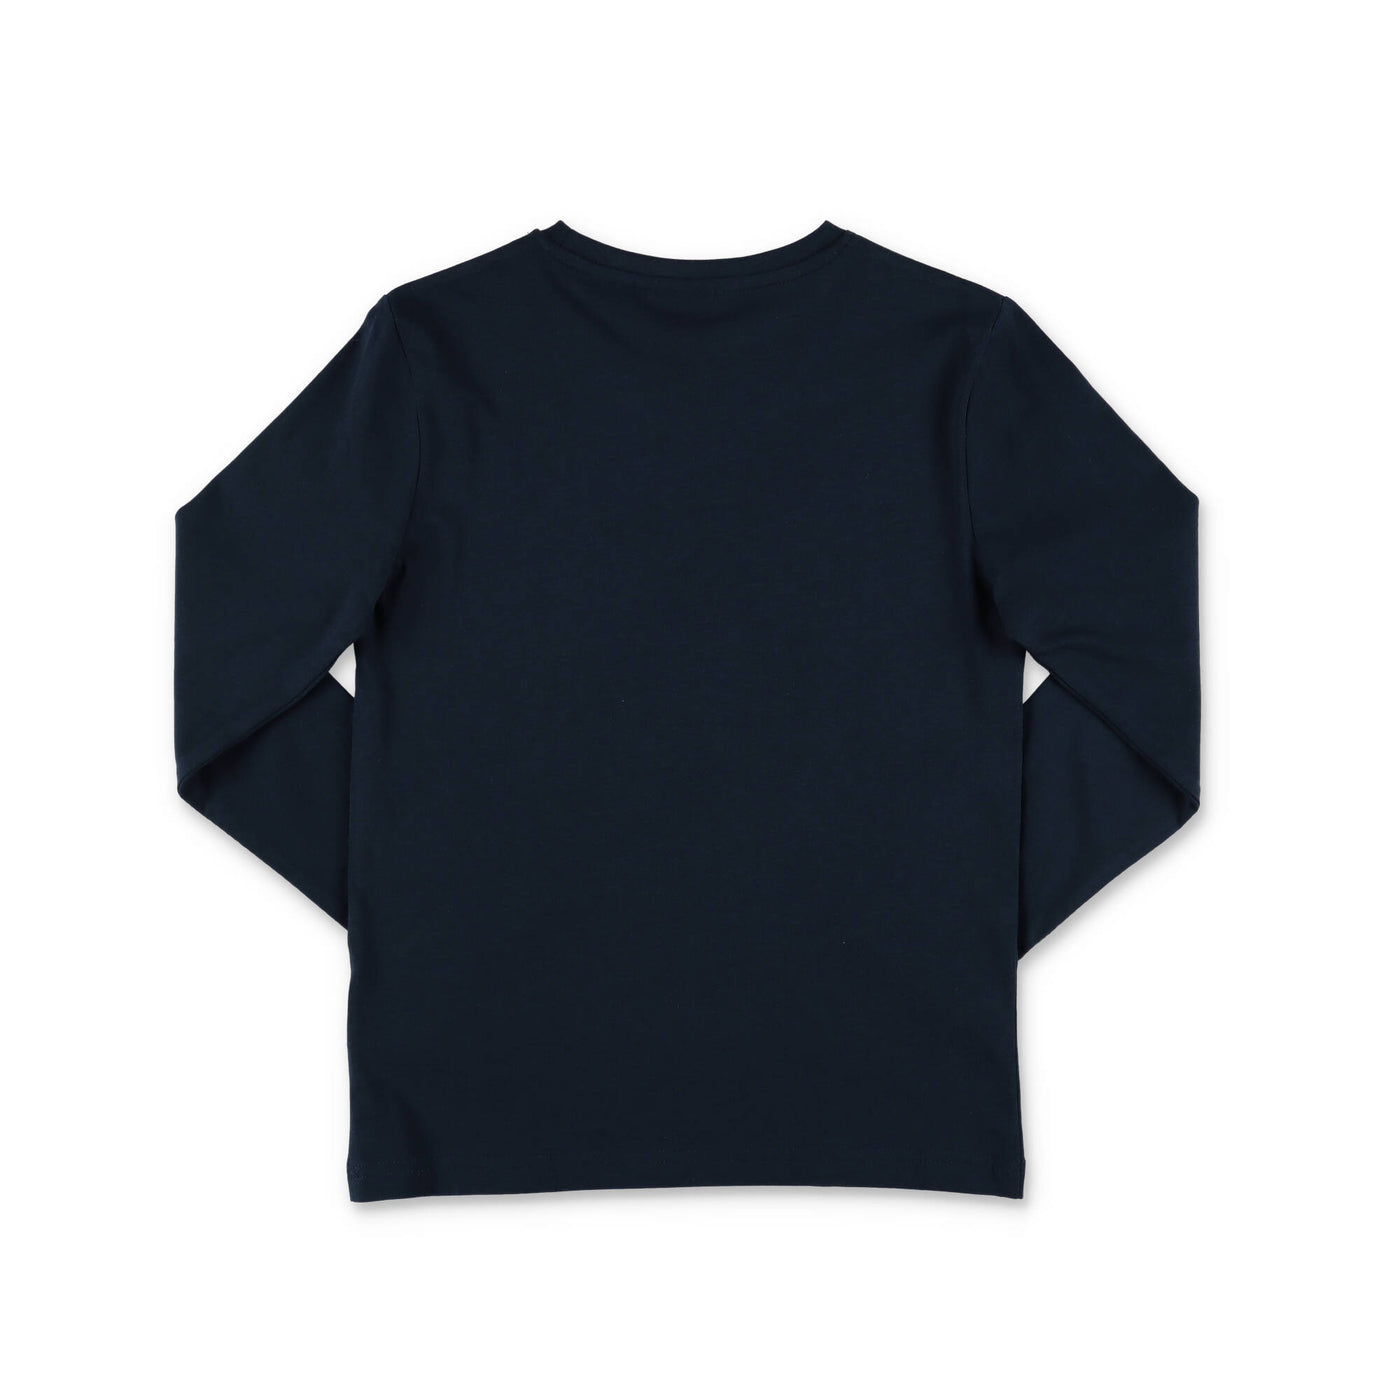 Blue cotton jersey boy HUGO BOSS t-shirt | Carofiglio Junior